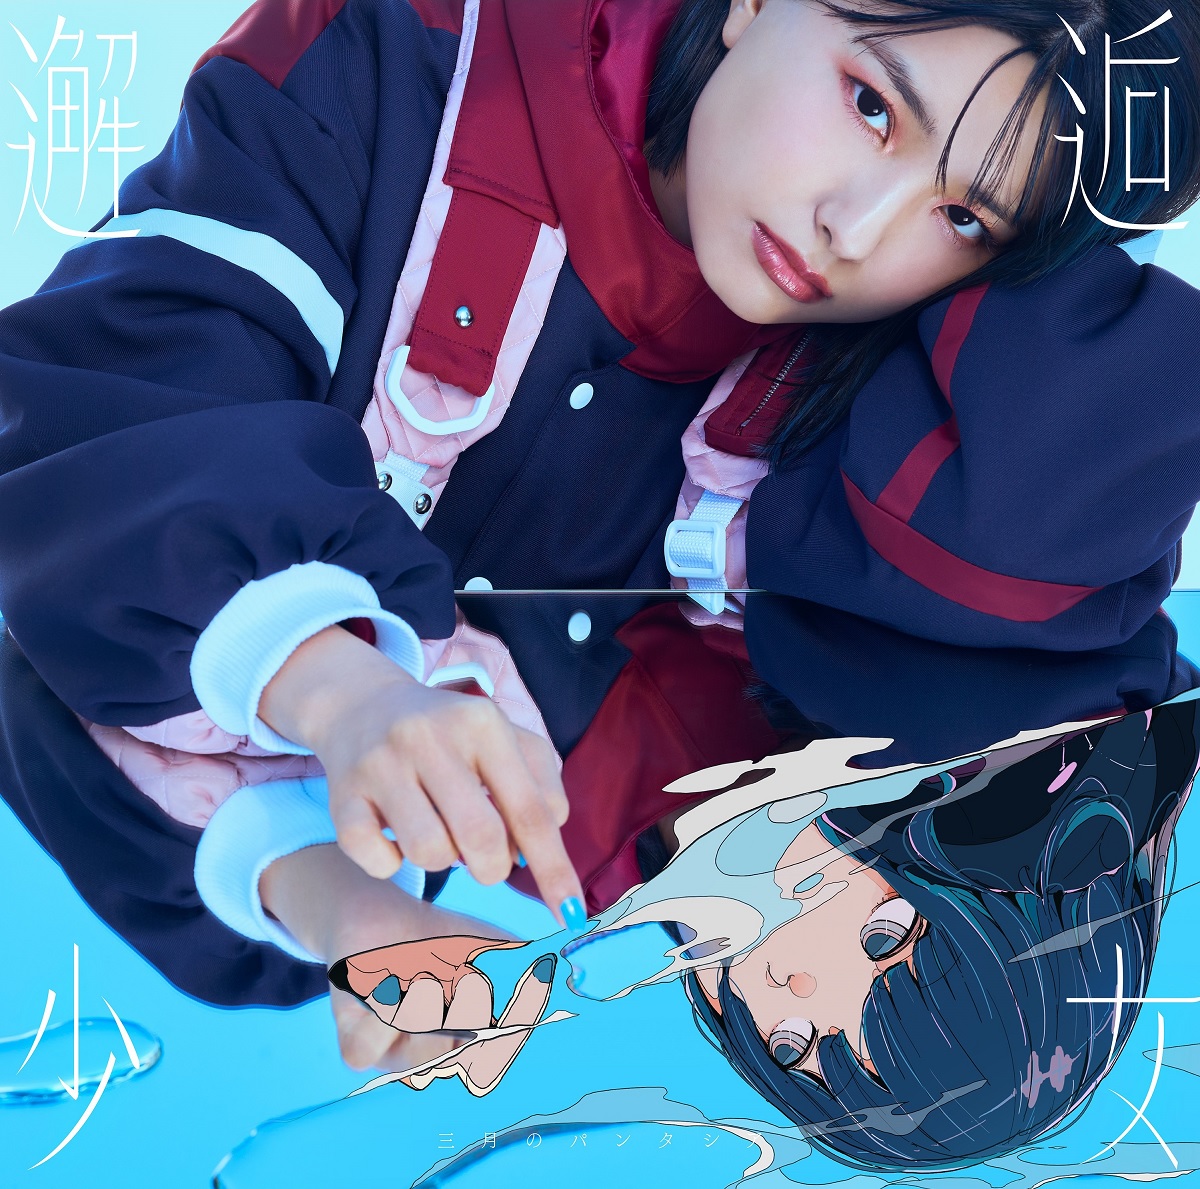 Cover art for『Sangatsu no Phantasia - あのね。』from the release『Kaikou Shoujo